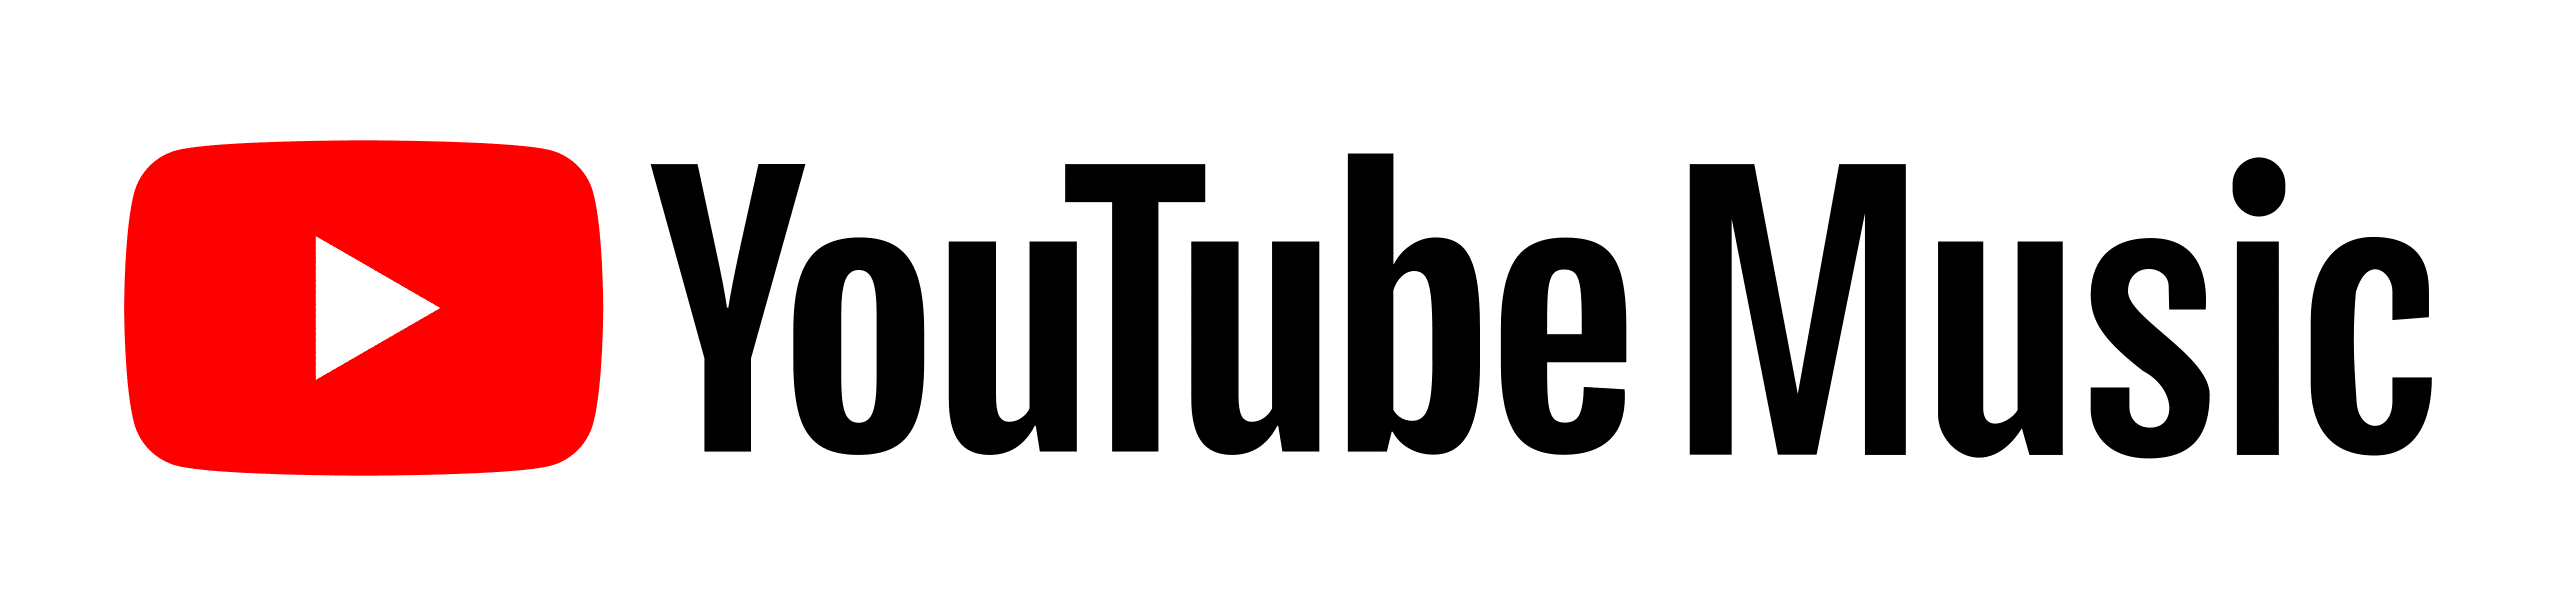 Youtube music logo on a white background.